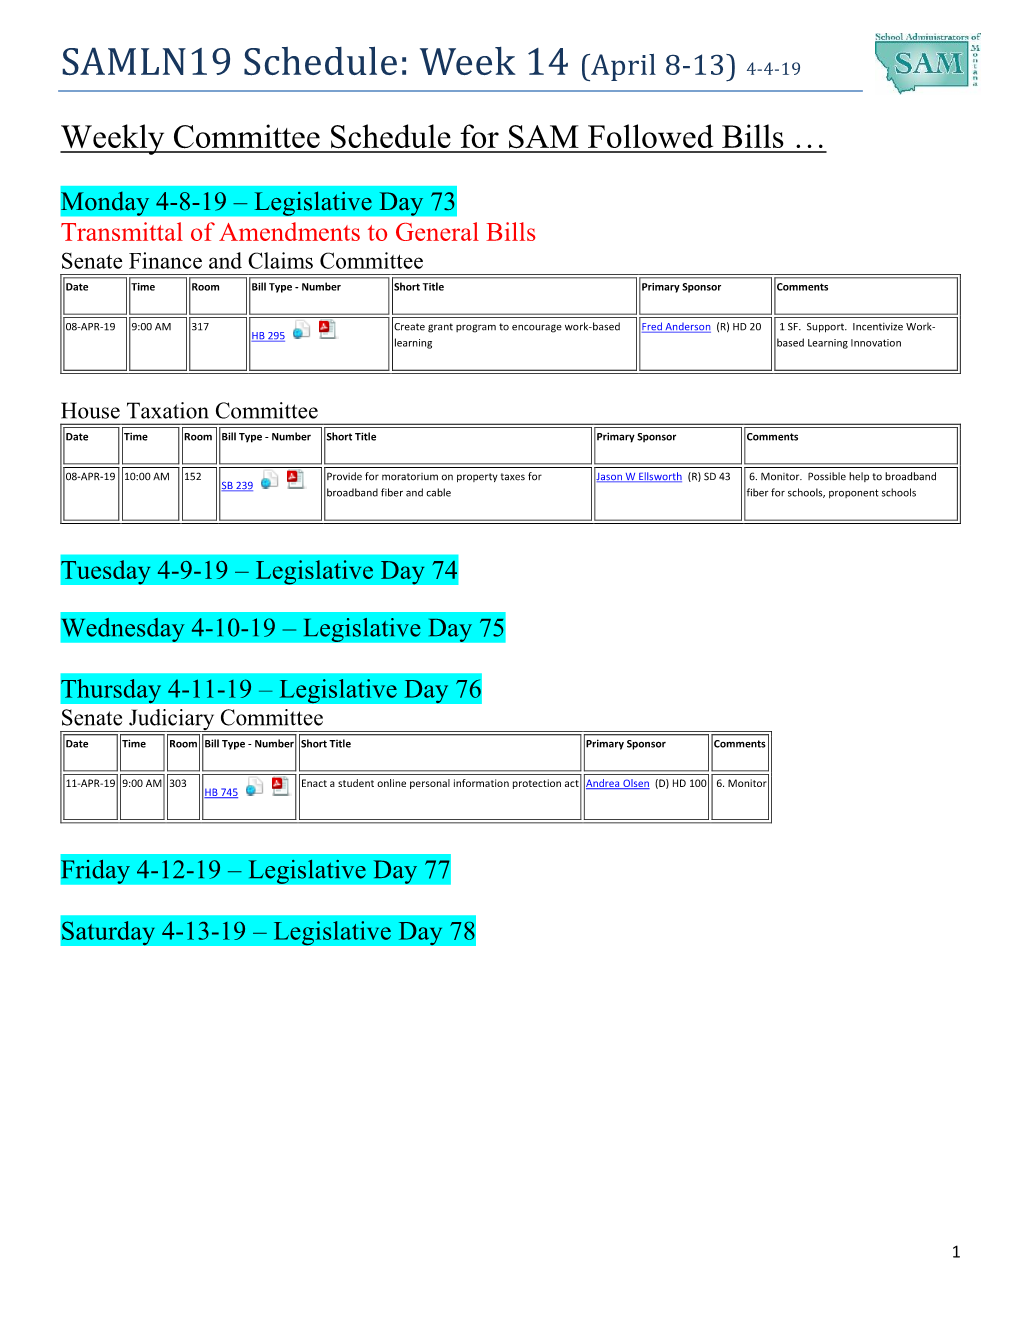 SAMLN19 Schedule: Week 14 (April 8-13) 4-4-19